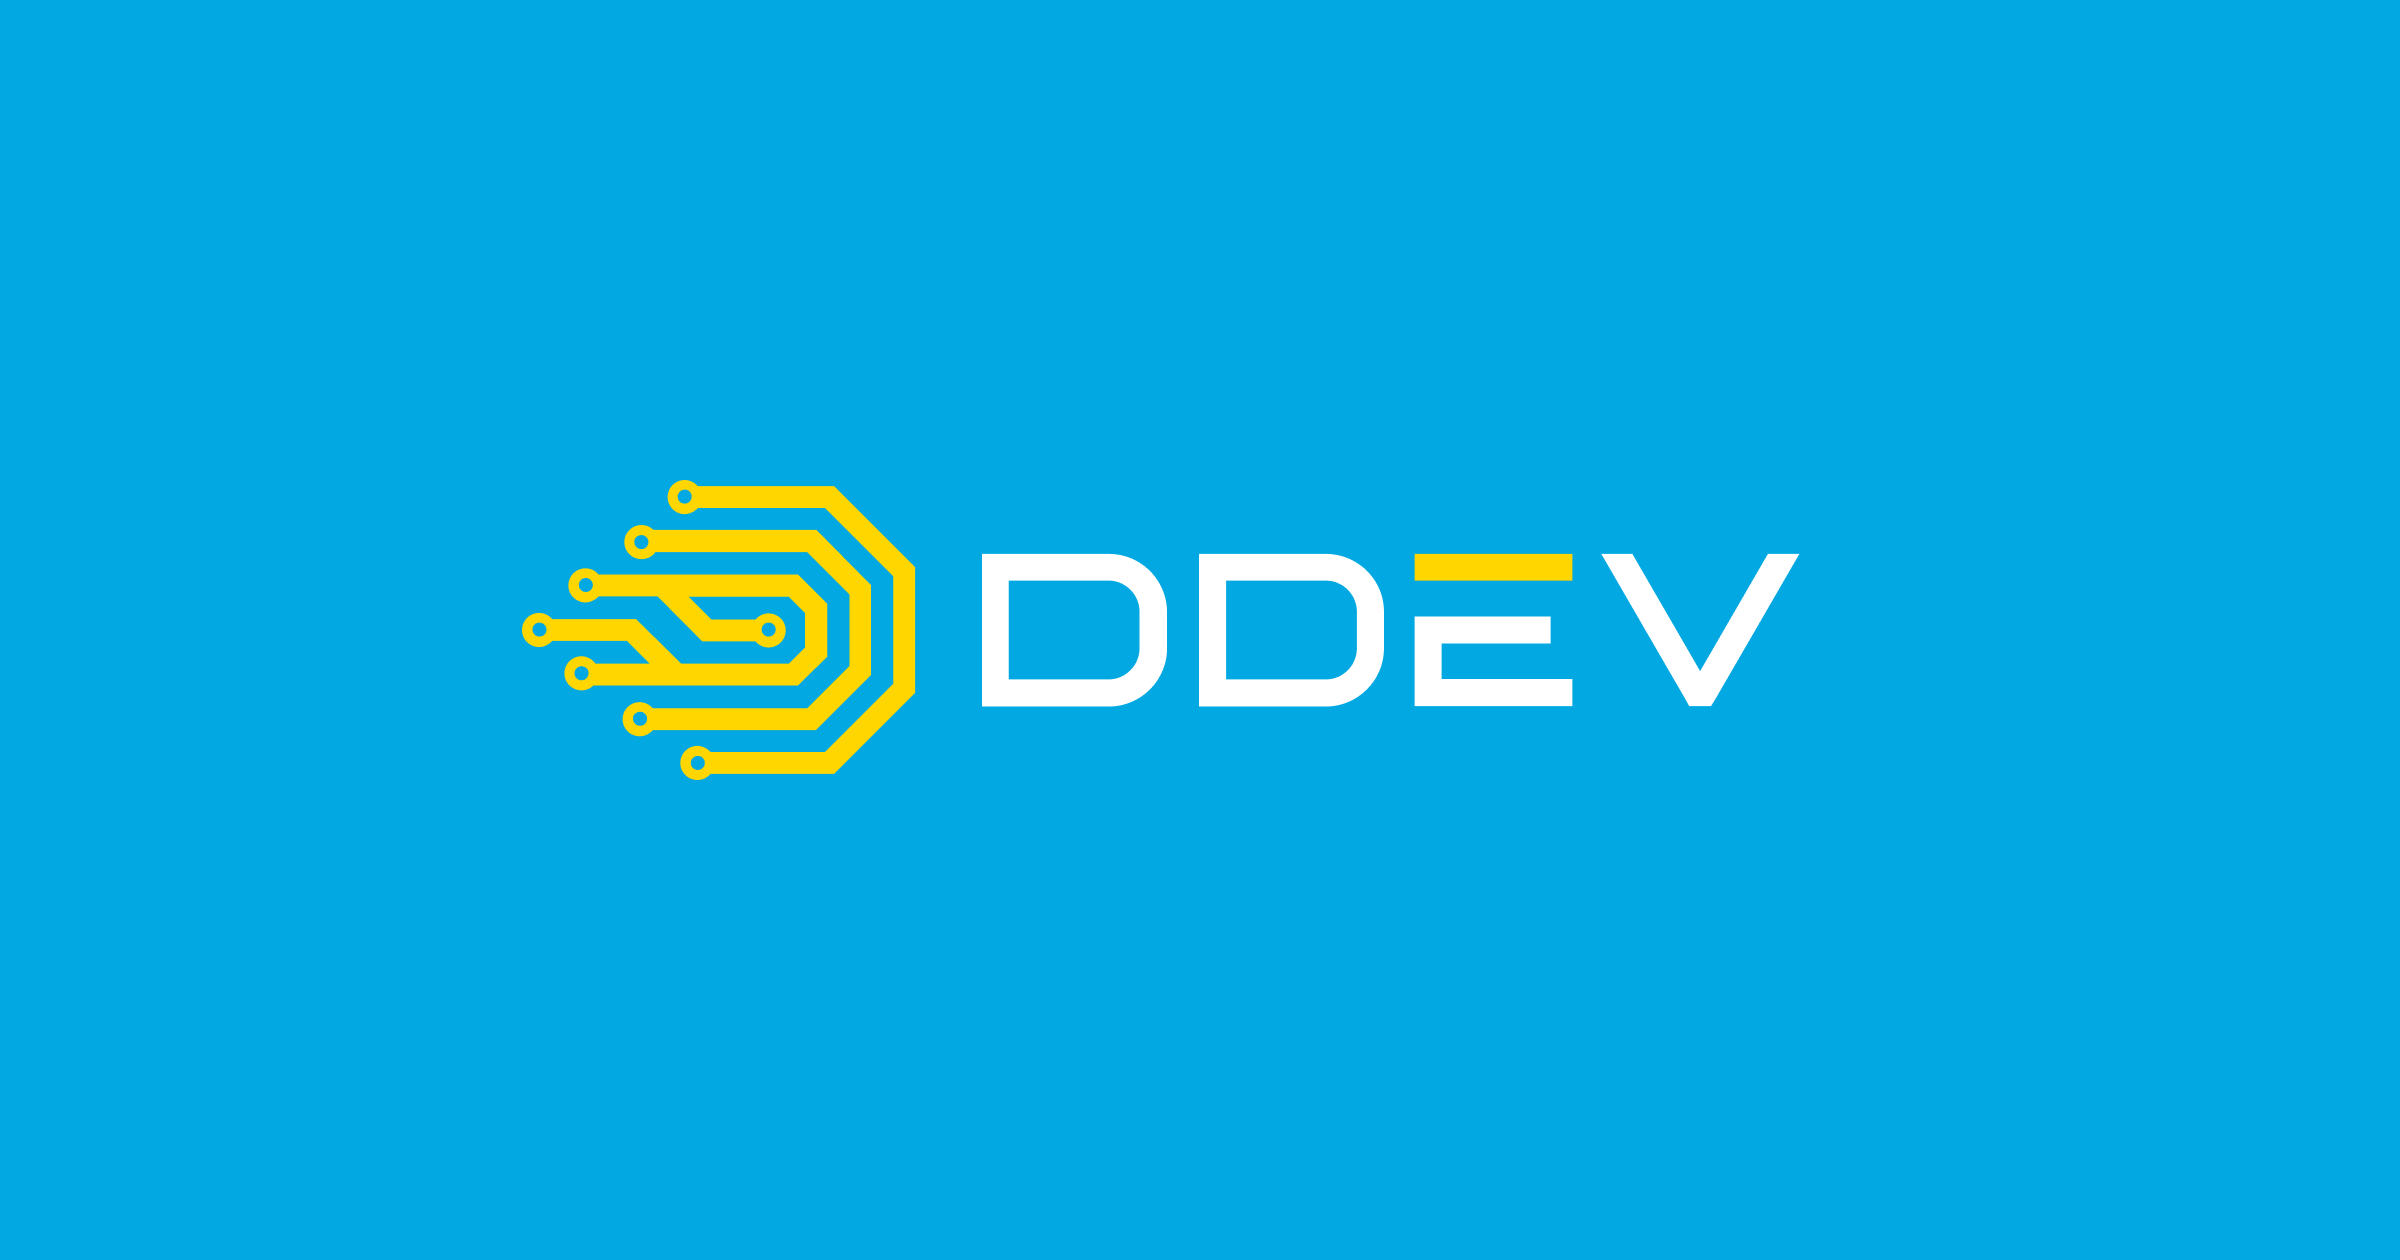 (c) Ddev.com